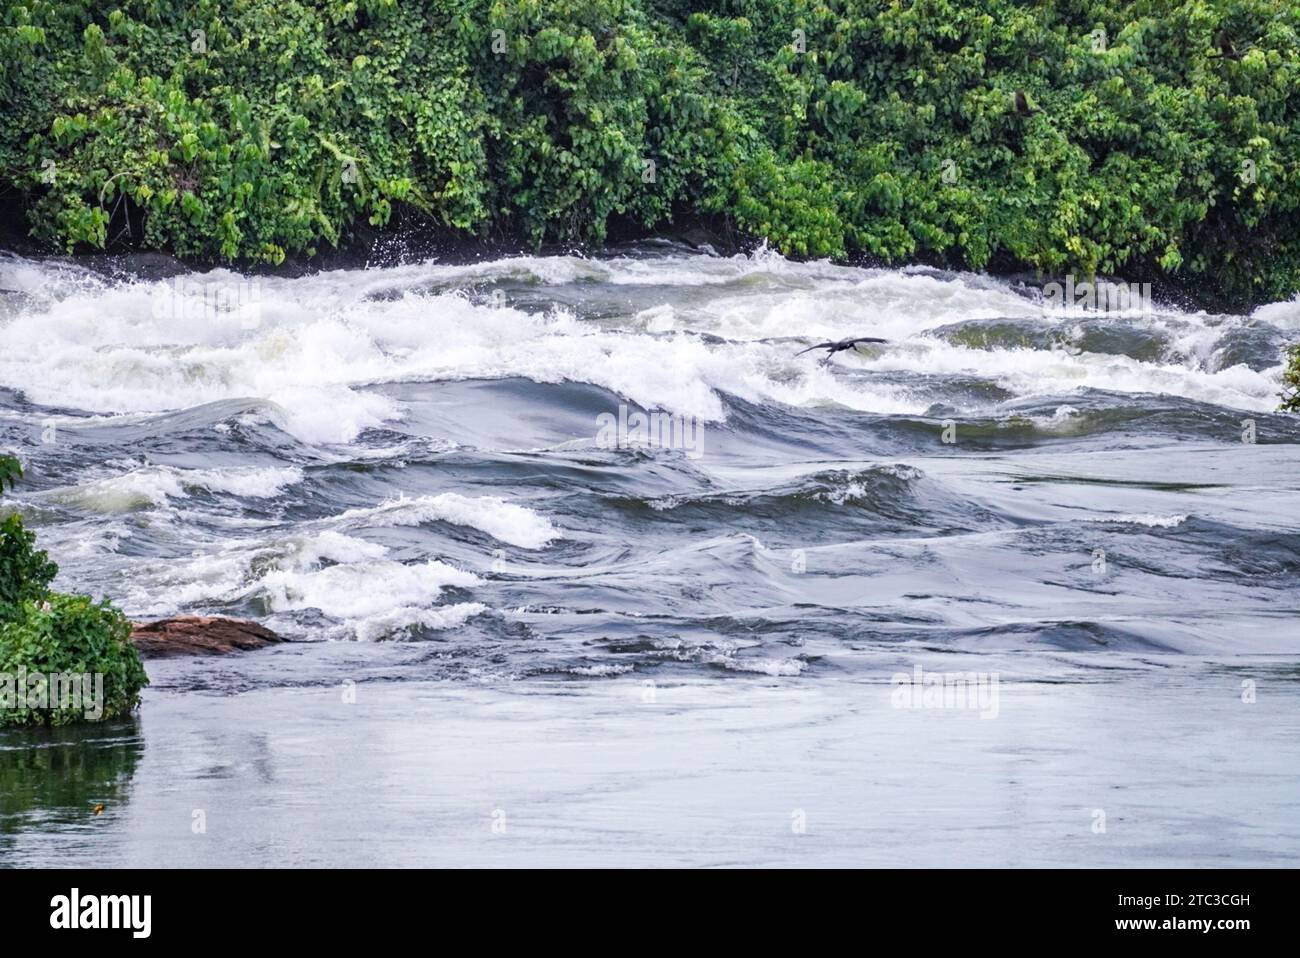 White Water Rapids of the Nile River - Uganda, Africa Stock Photo